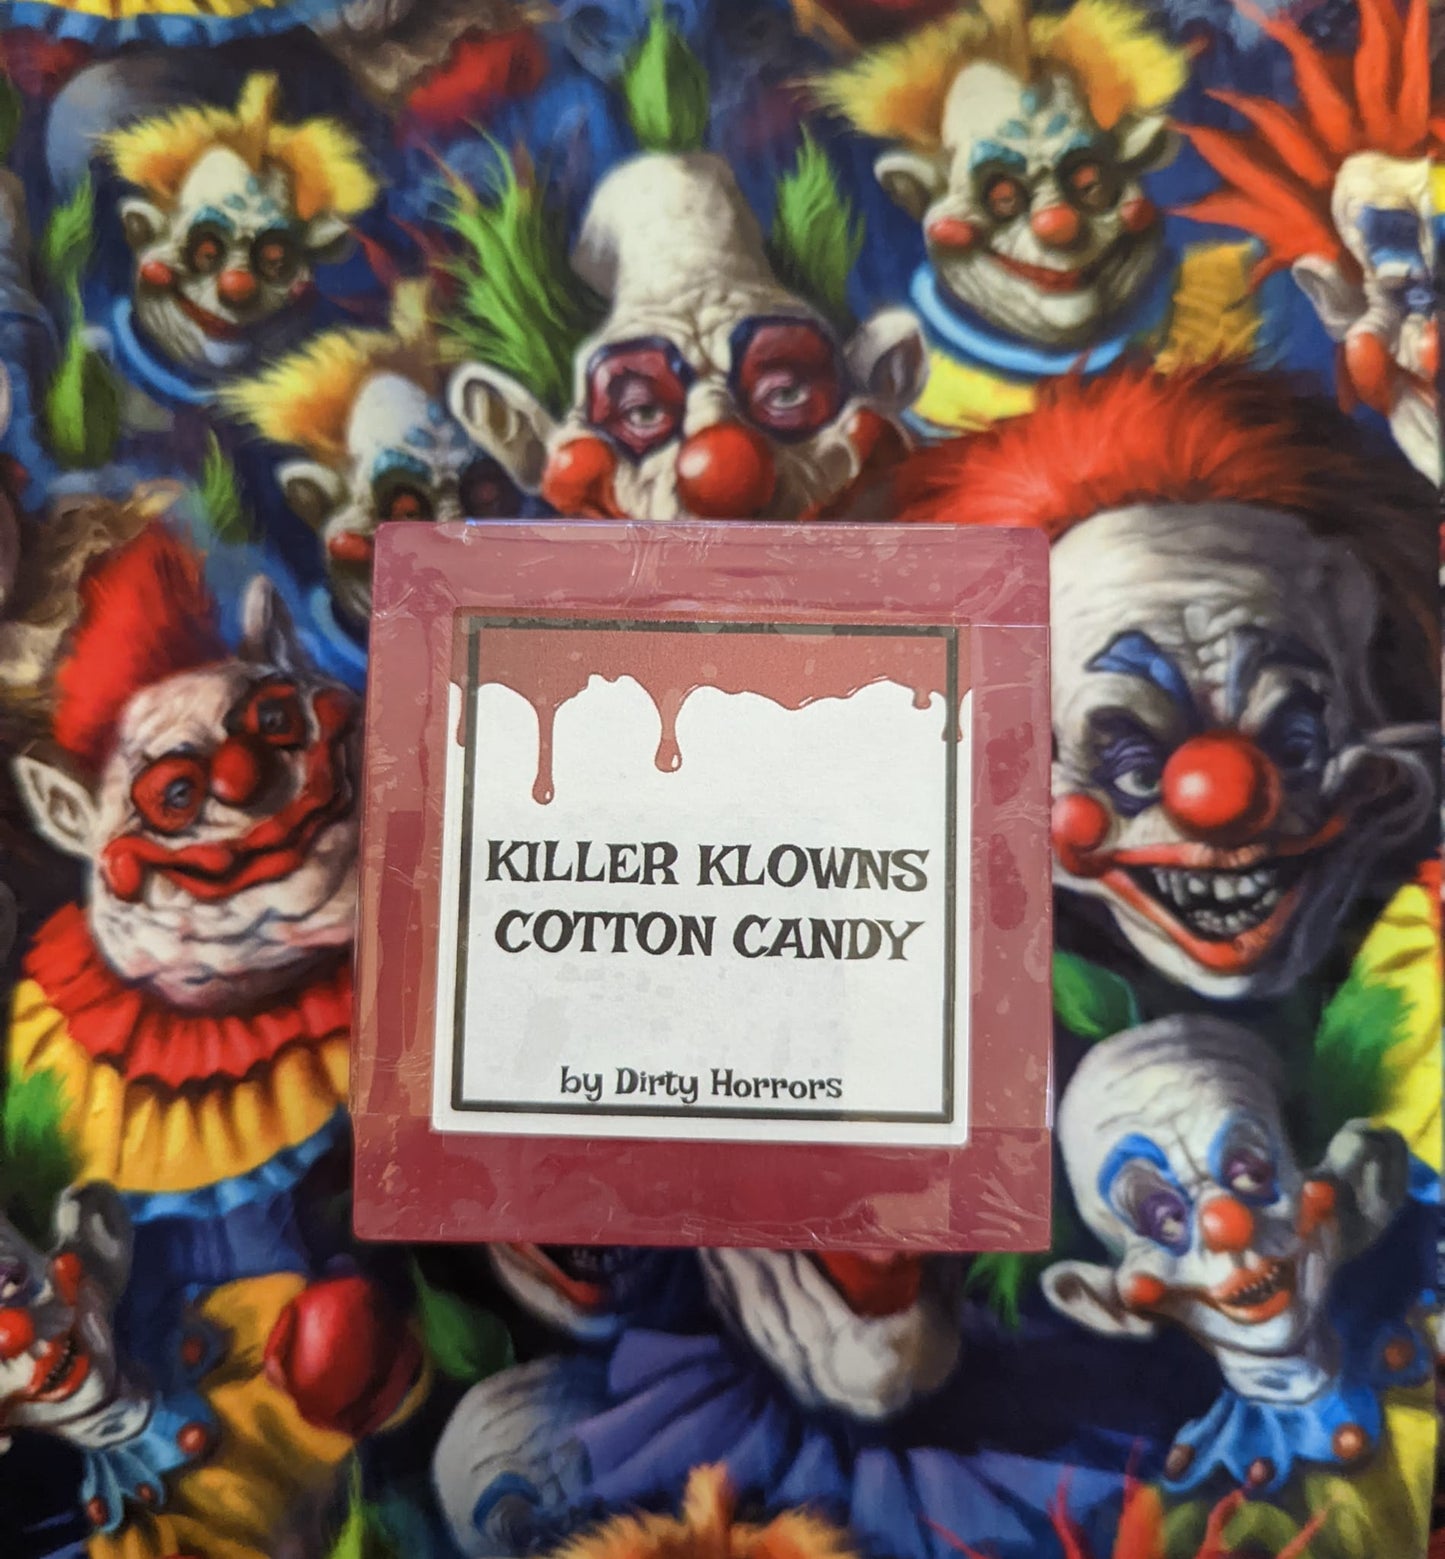 Dirty Horror Killer Klowns Cotton Candy soap